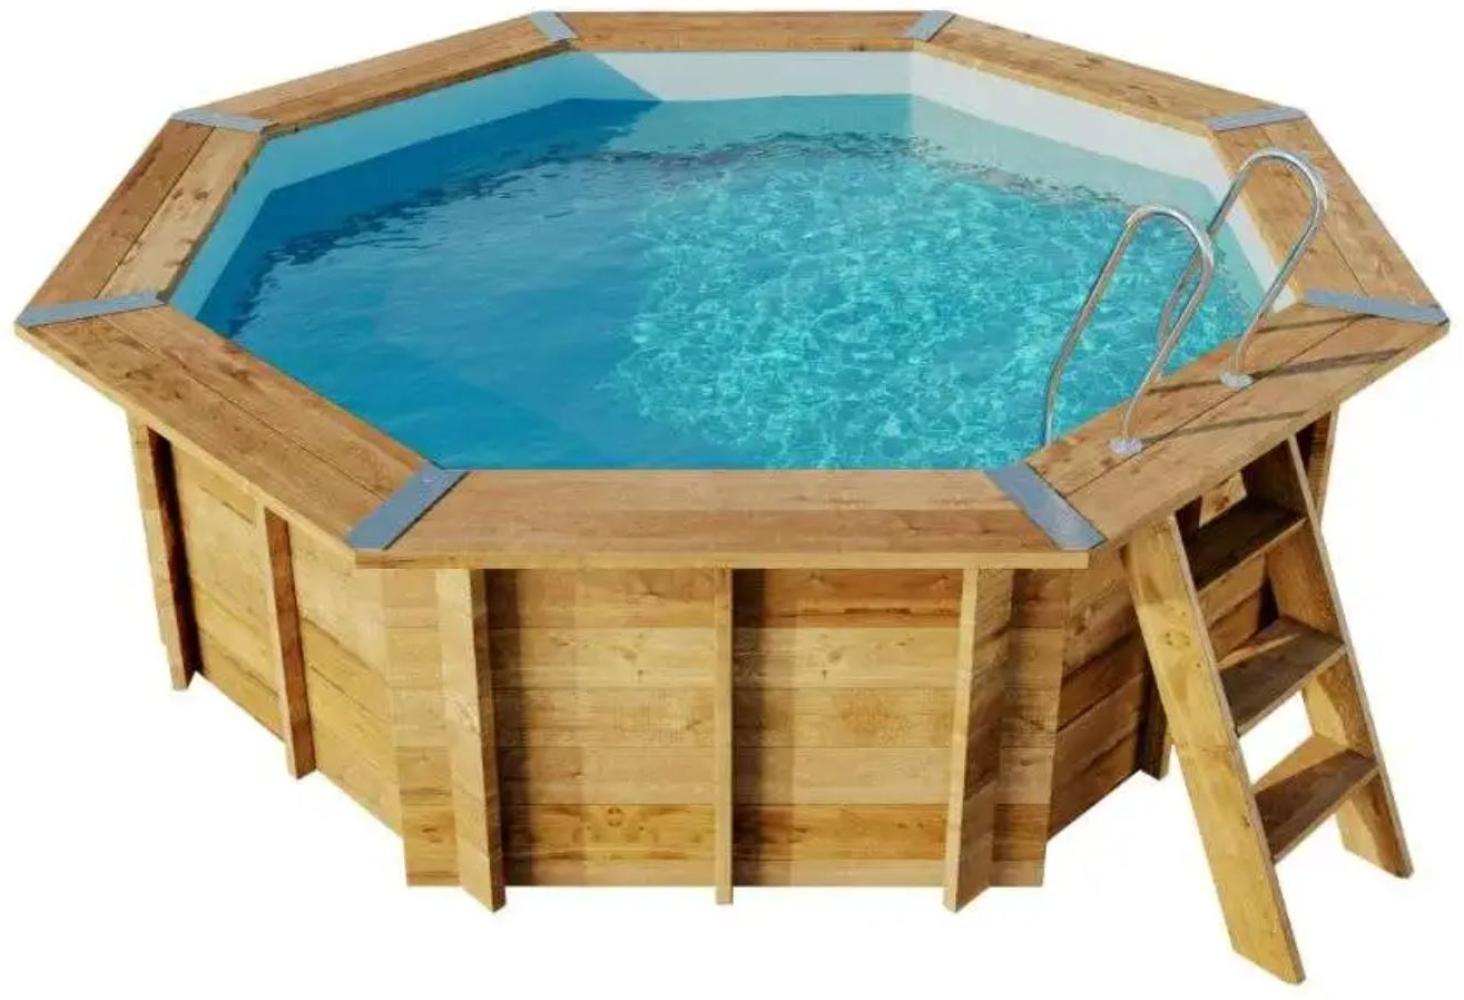 Gre Pools Gartenpool Lanzarote Pool aus Holz in Braun Bild 1